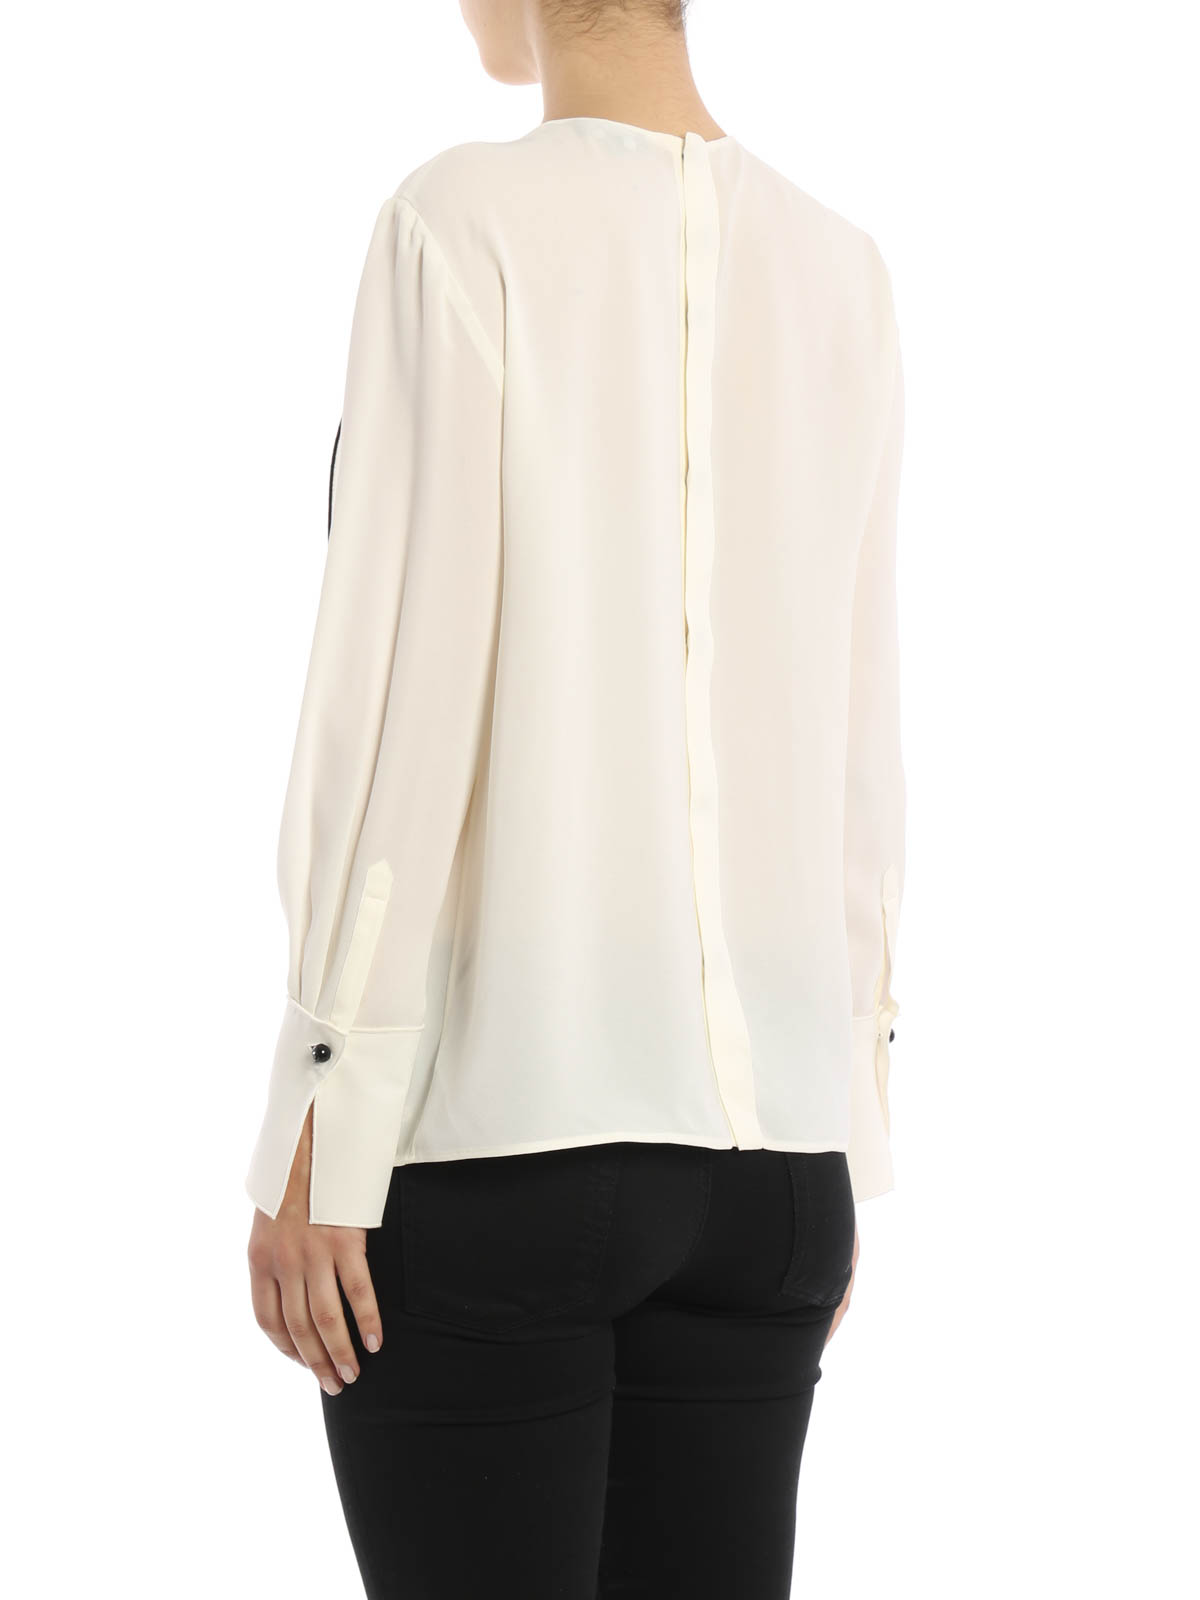 Blouses Giorgio Armani - Silk chiffon blouse - VAC20TVA68C101 